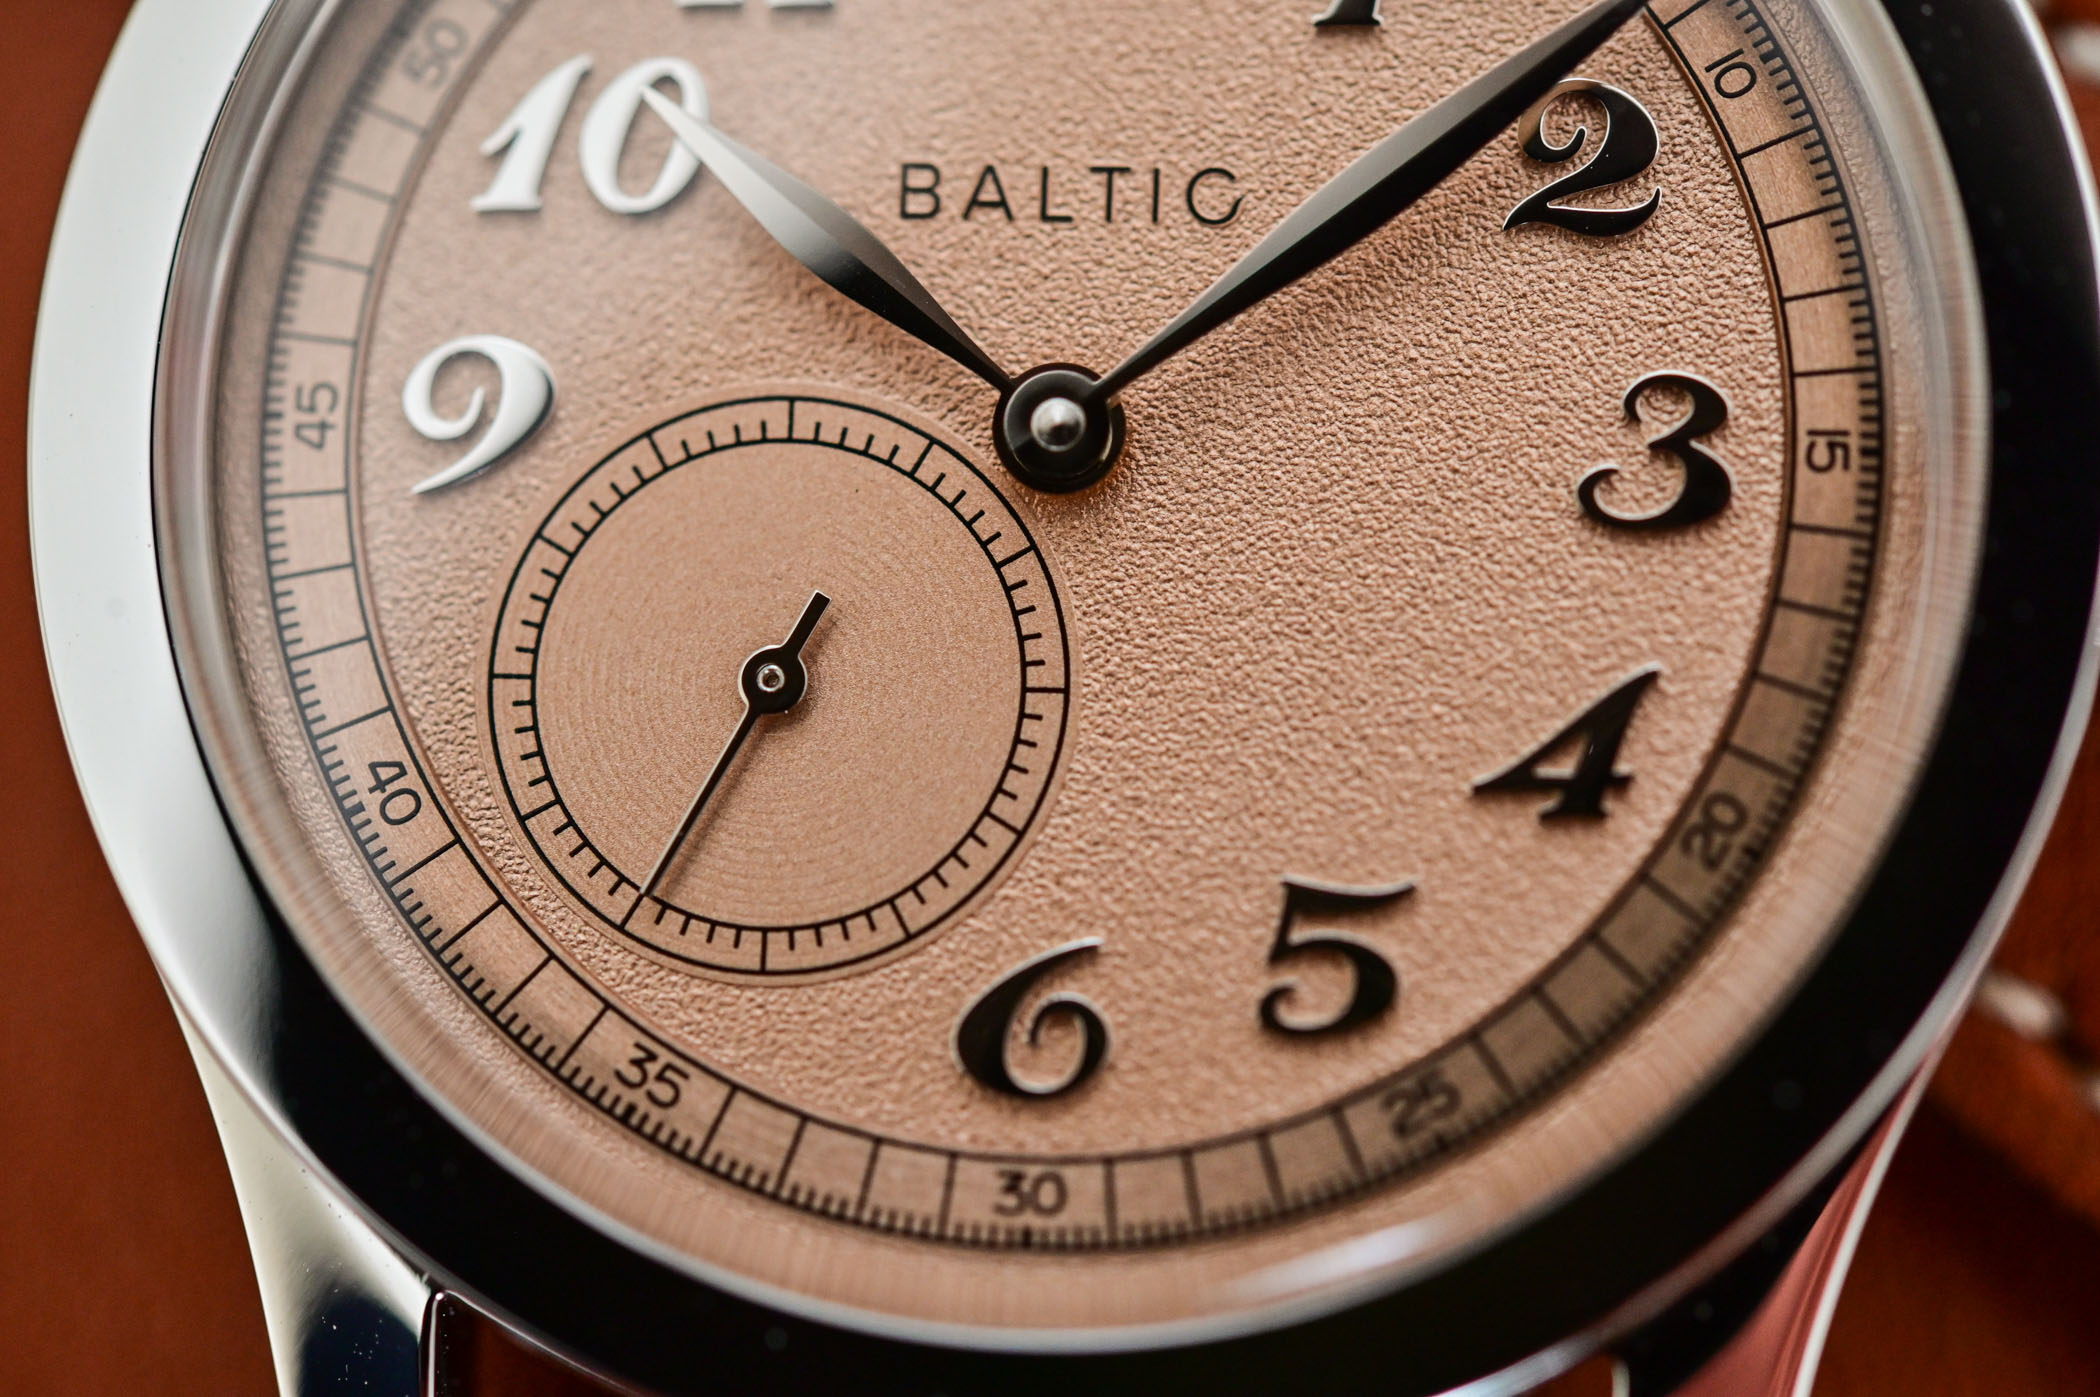 Baltic MR01 Salmon Accessible Calatrava-style Micro Rotor Watch